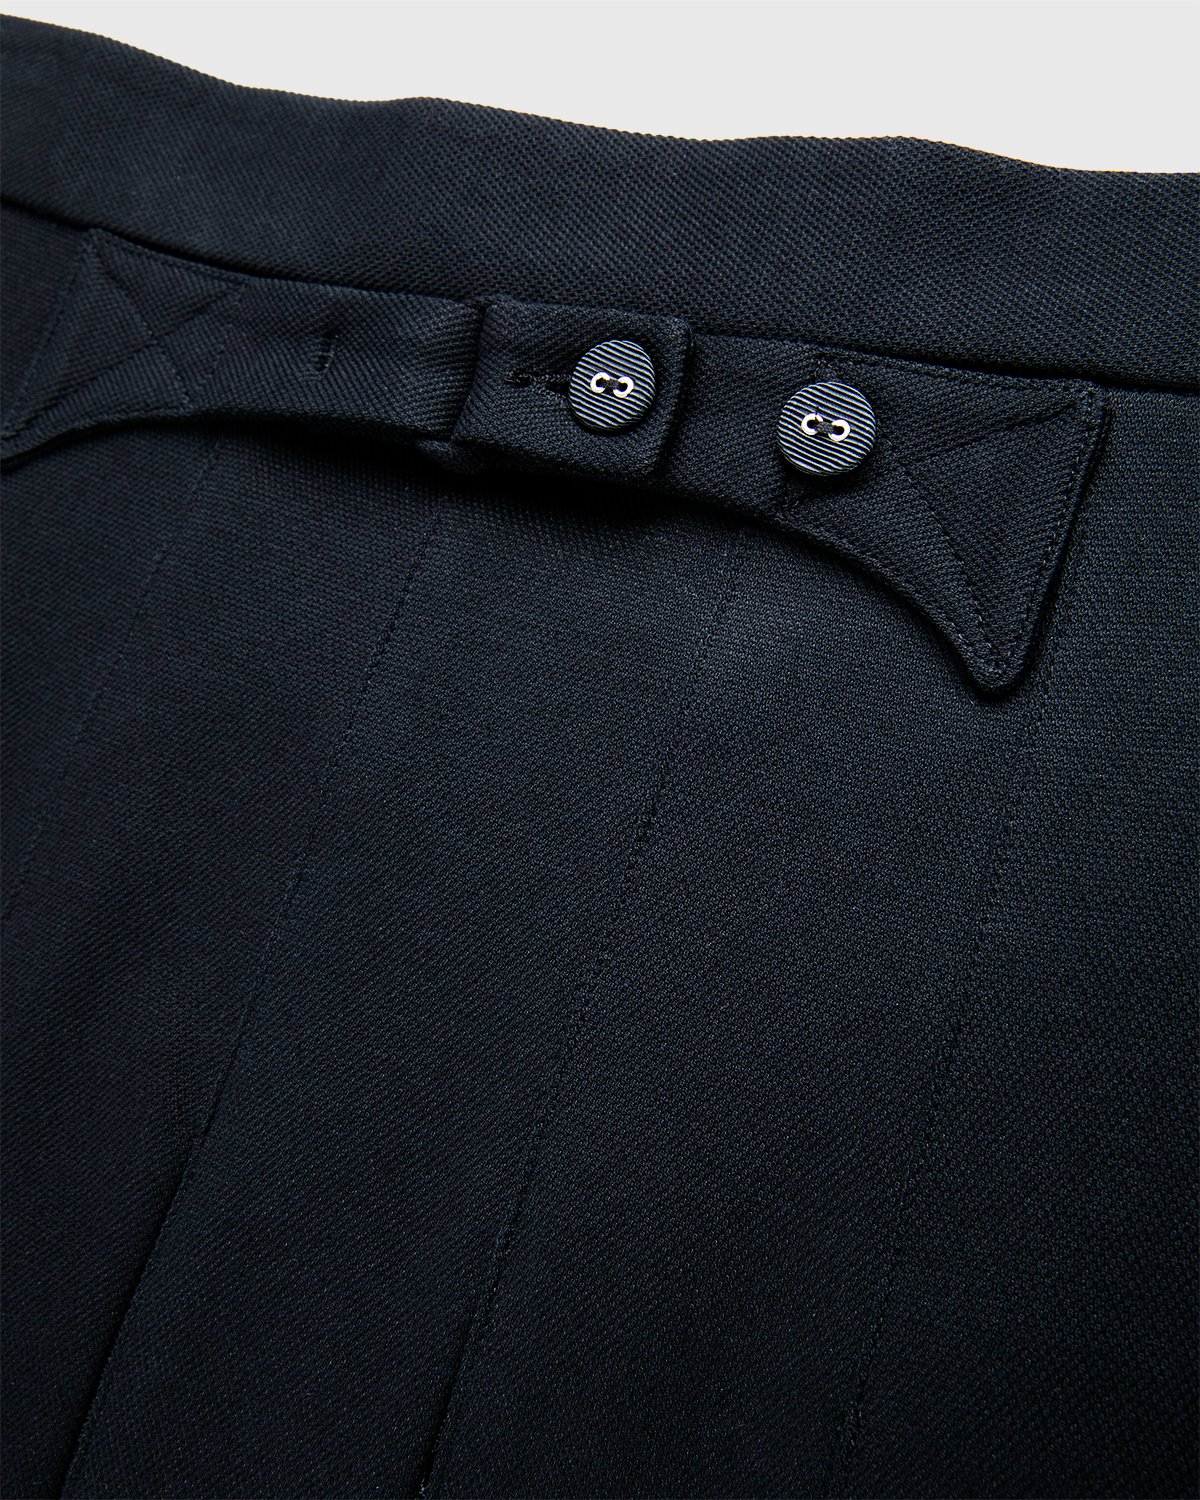 Thom Browne x Highsnobiety - Women’s Pleated Mesh Skirt Black - Clothing - Black - Image 5